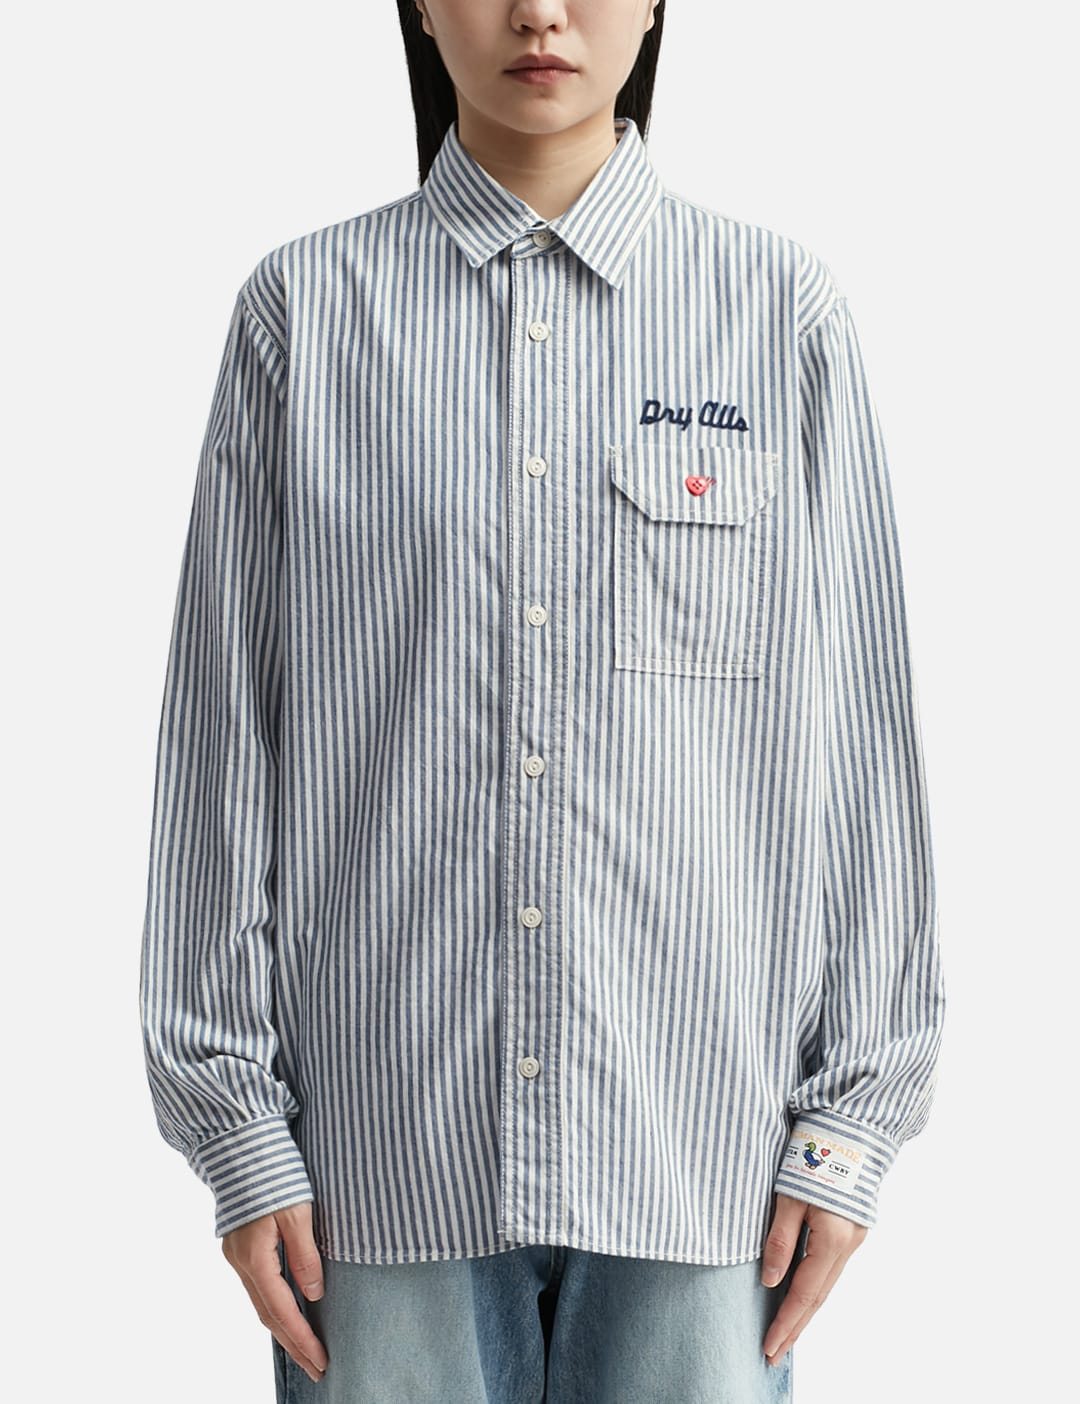 SHELL100%COTTONHuman Made Striped Work Shirt L ワークシャツ